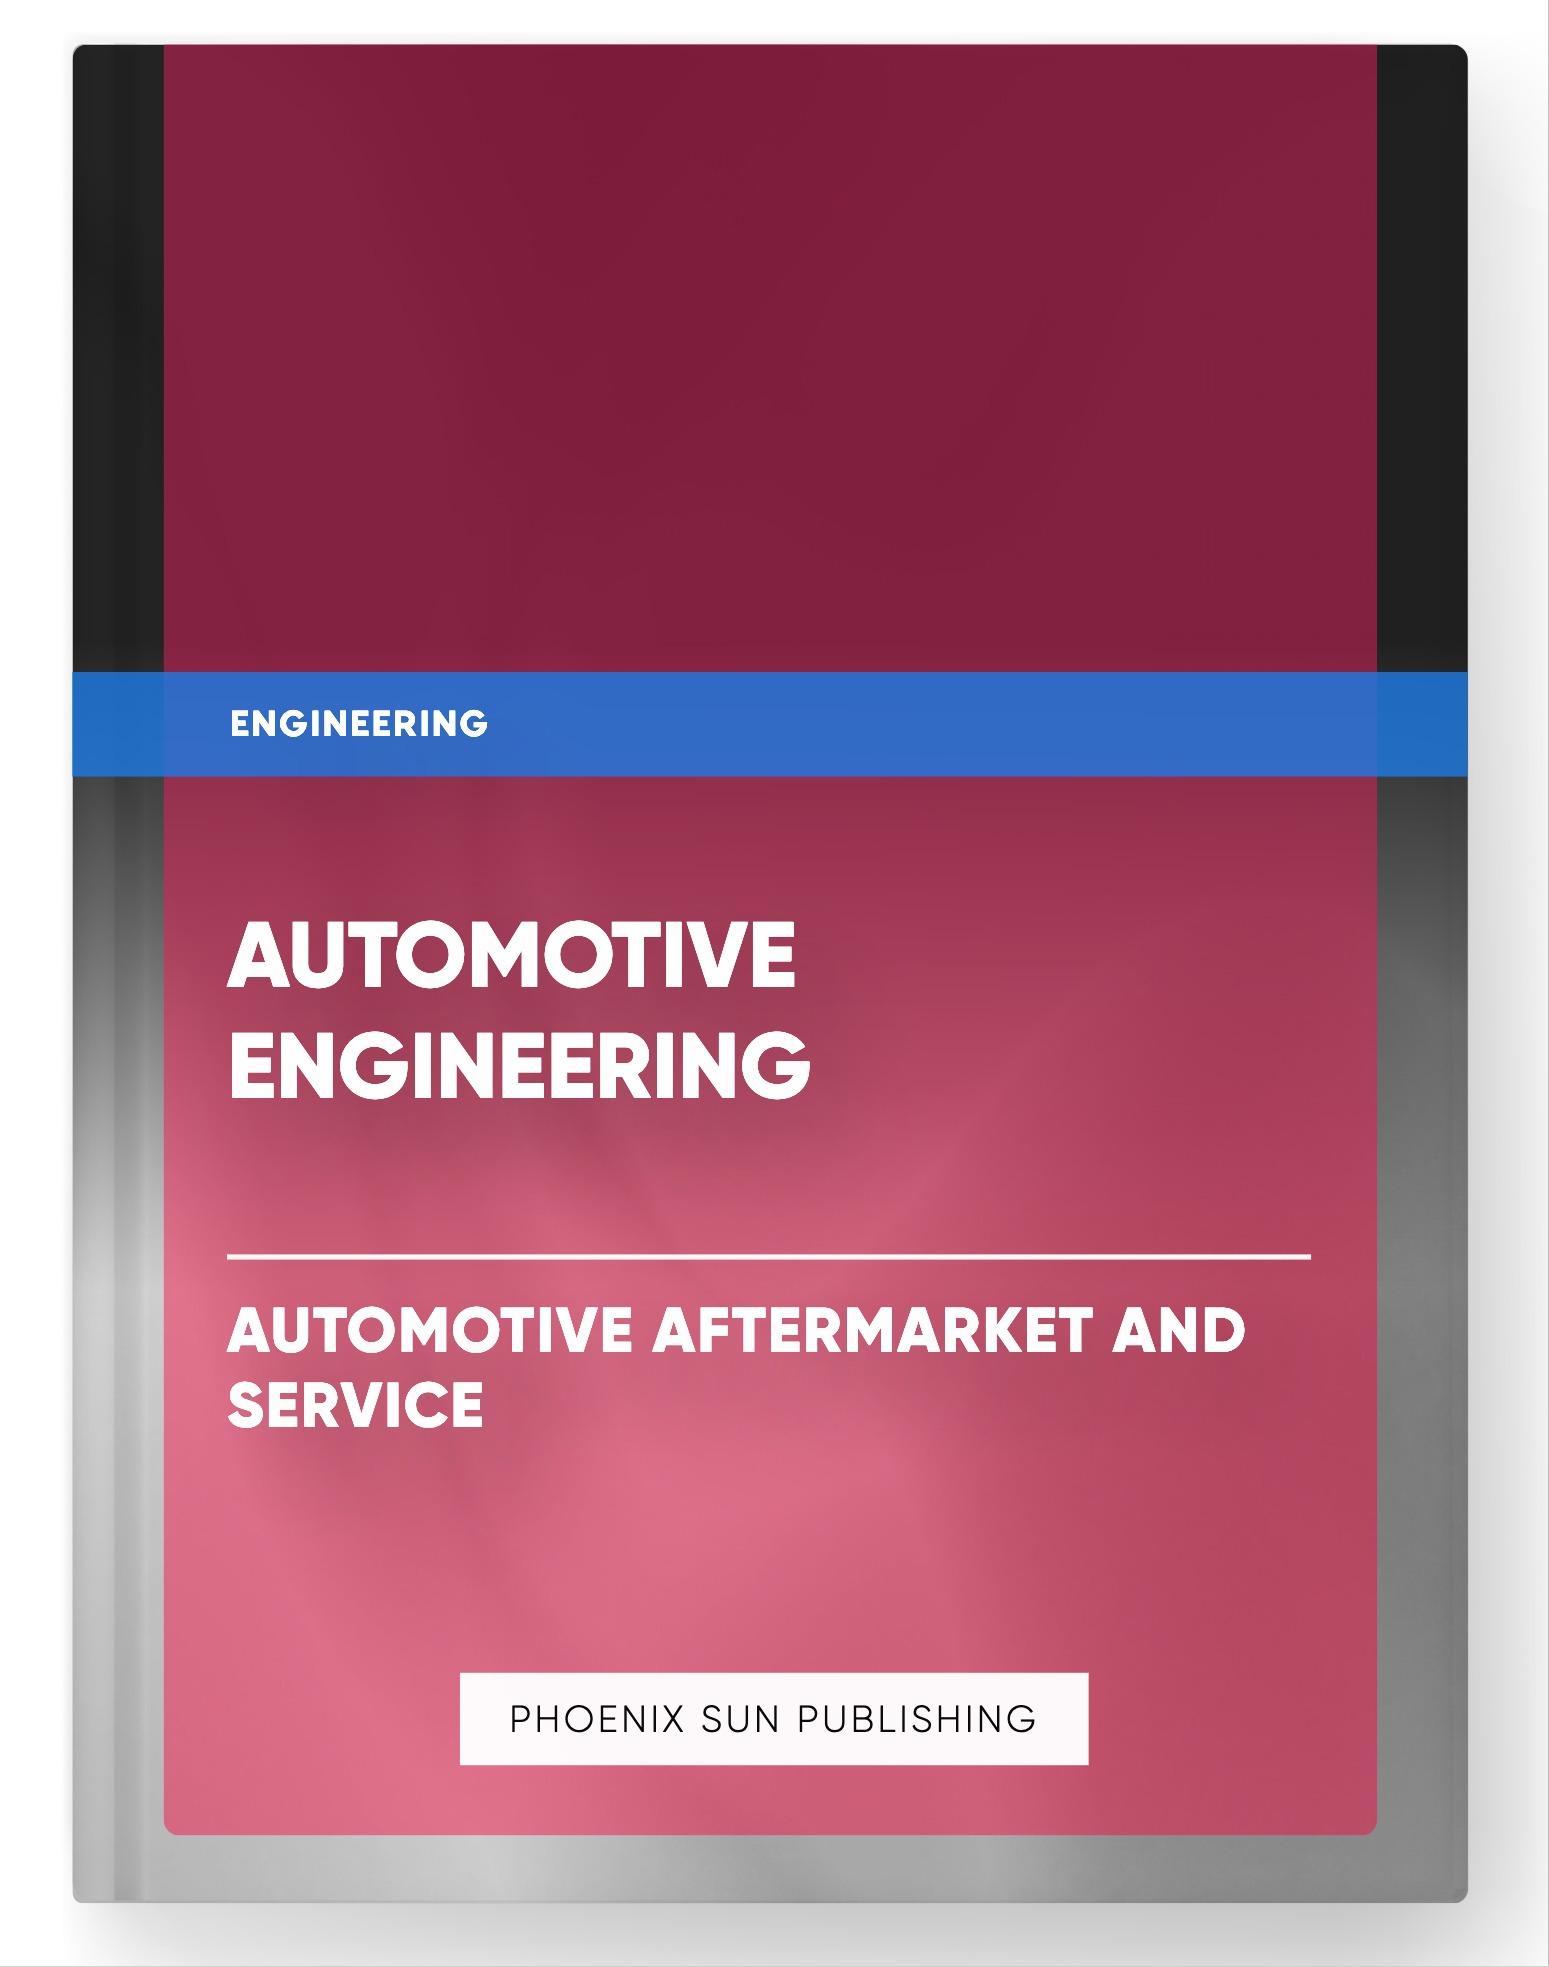 Automotive Engineering – Automotive Aftermarket and Service